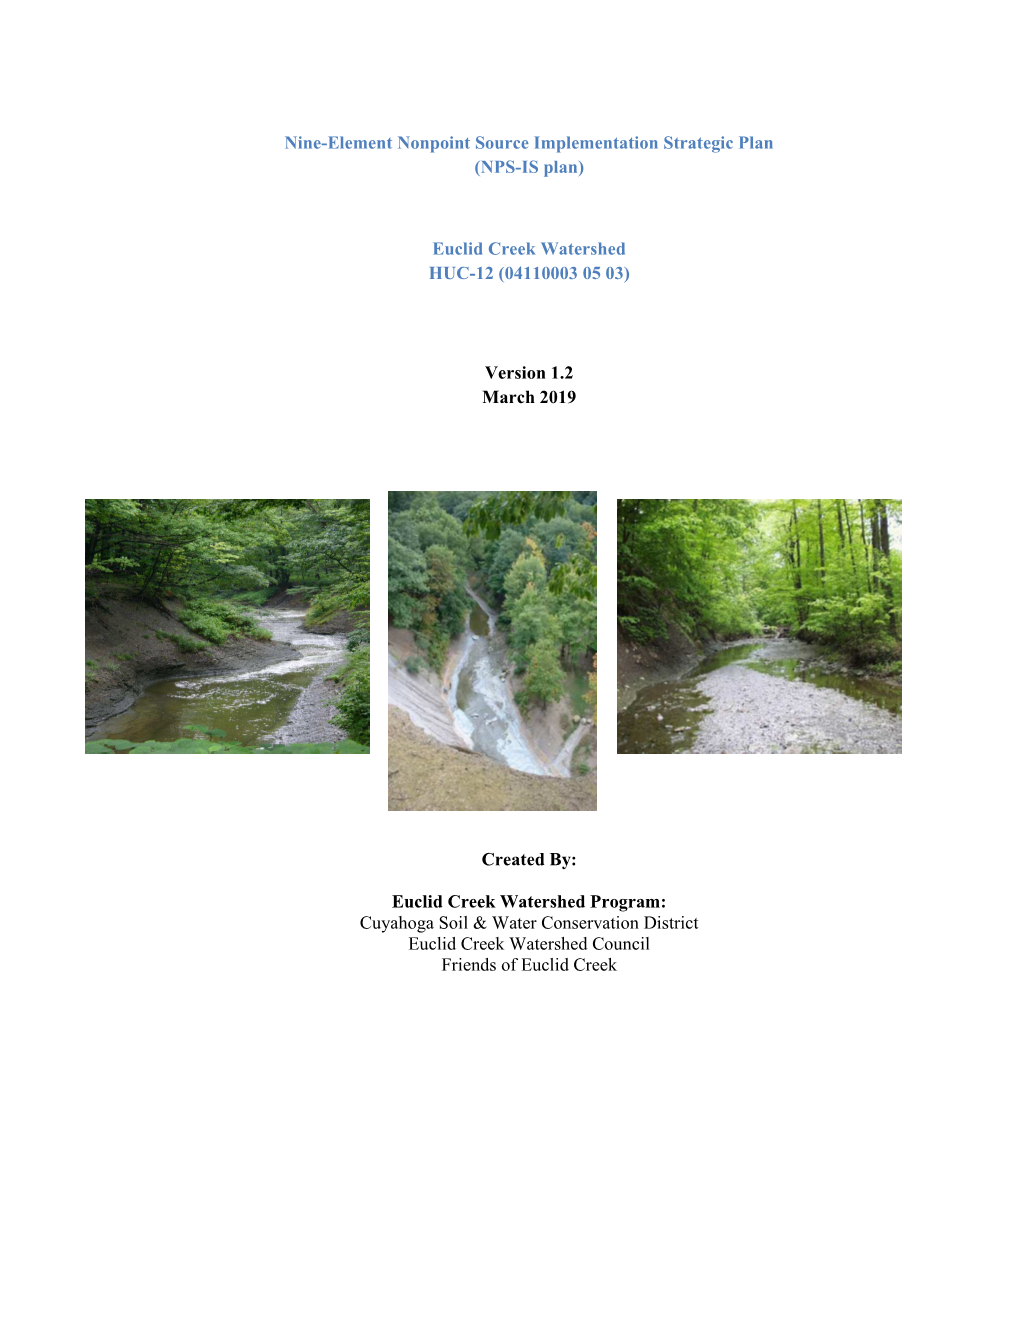 (NPS-IS Plan) Euclid Creek Watershed HUC-12 (04110003 05